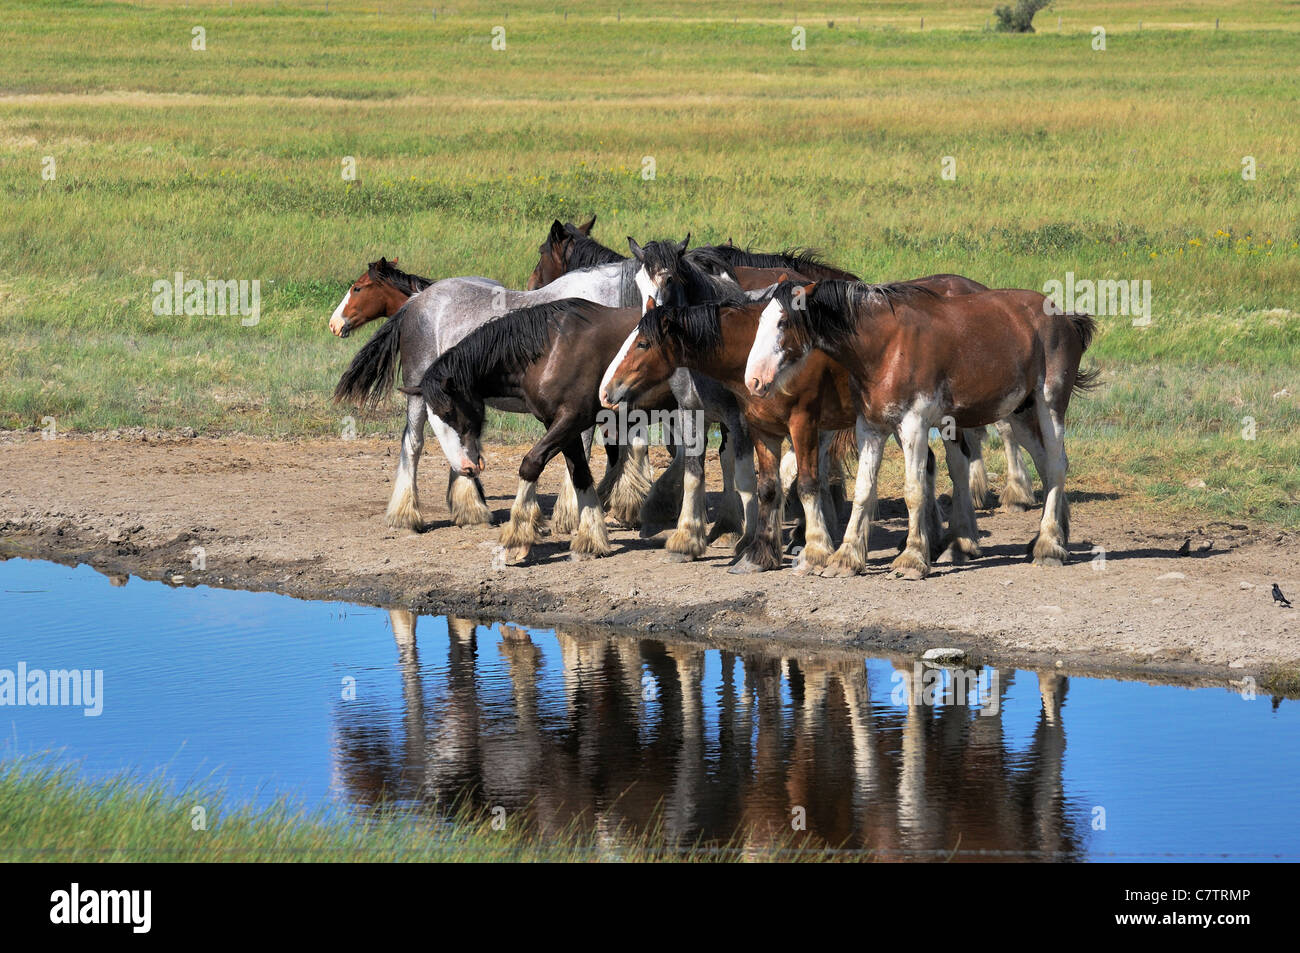 A heard of horses along a small river in the Canadian prairies, Saskatchewan Canada. Stock Photo